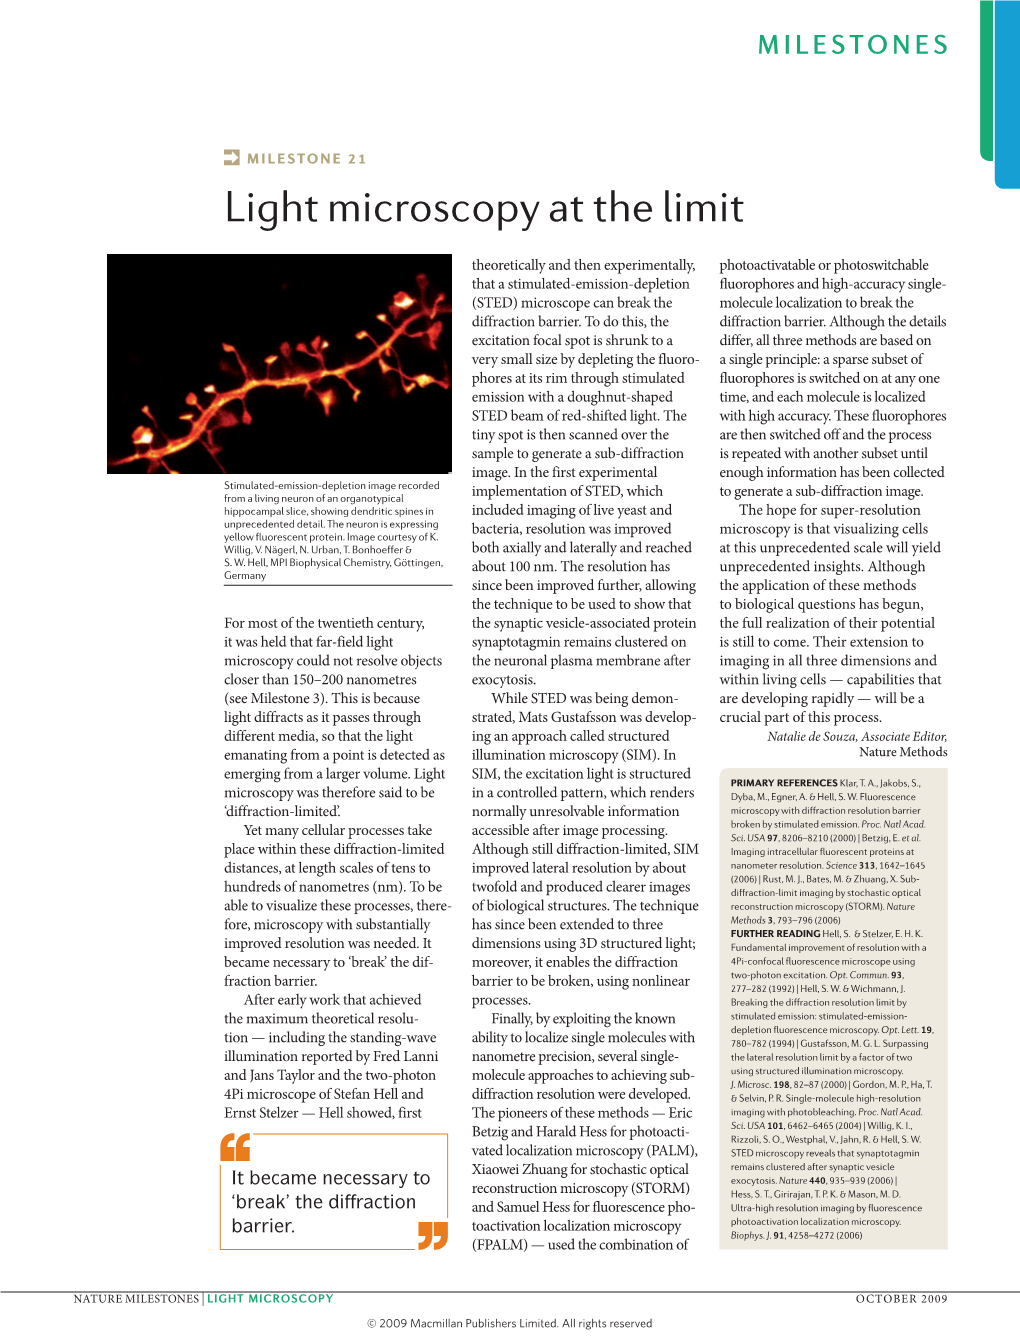 Milestone 21: Light Microscopy at the Limit